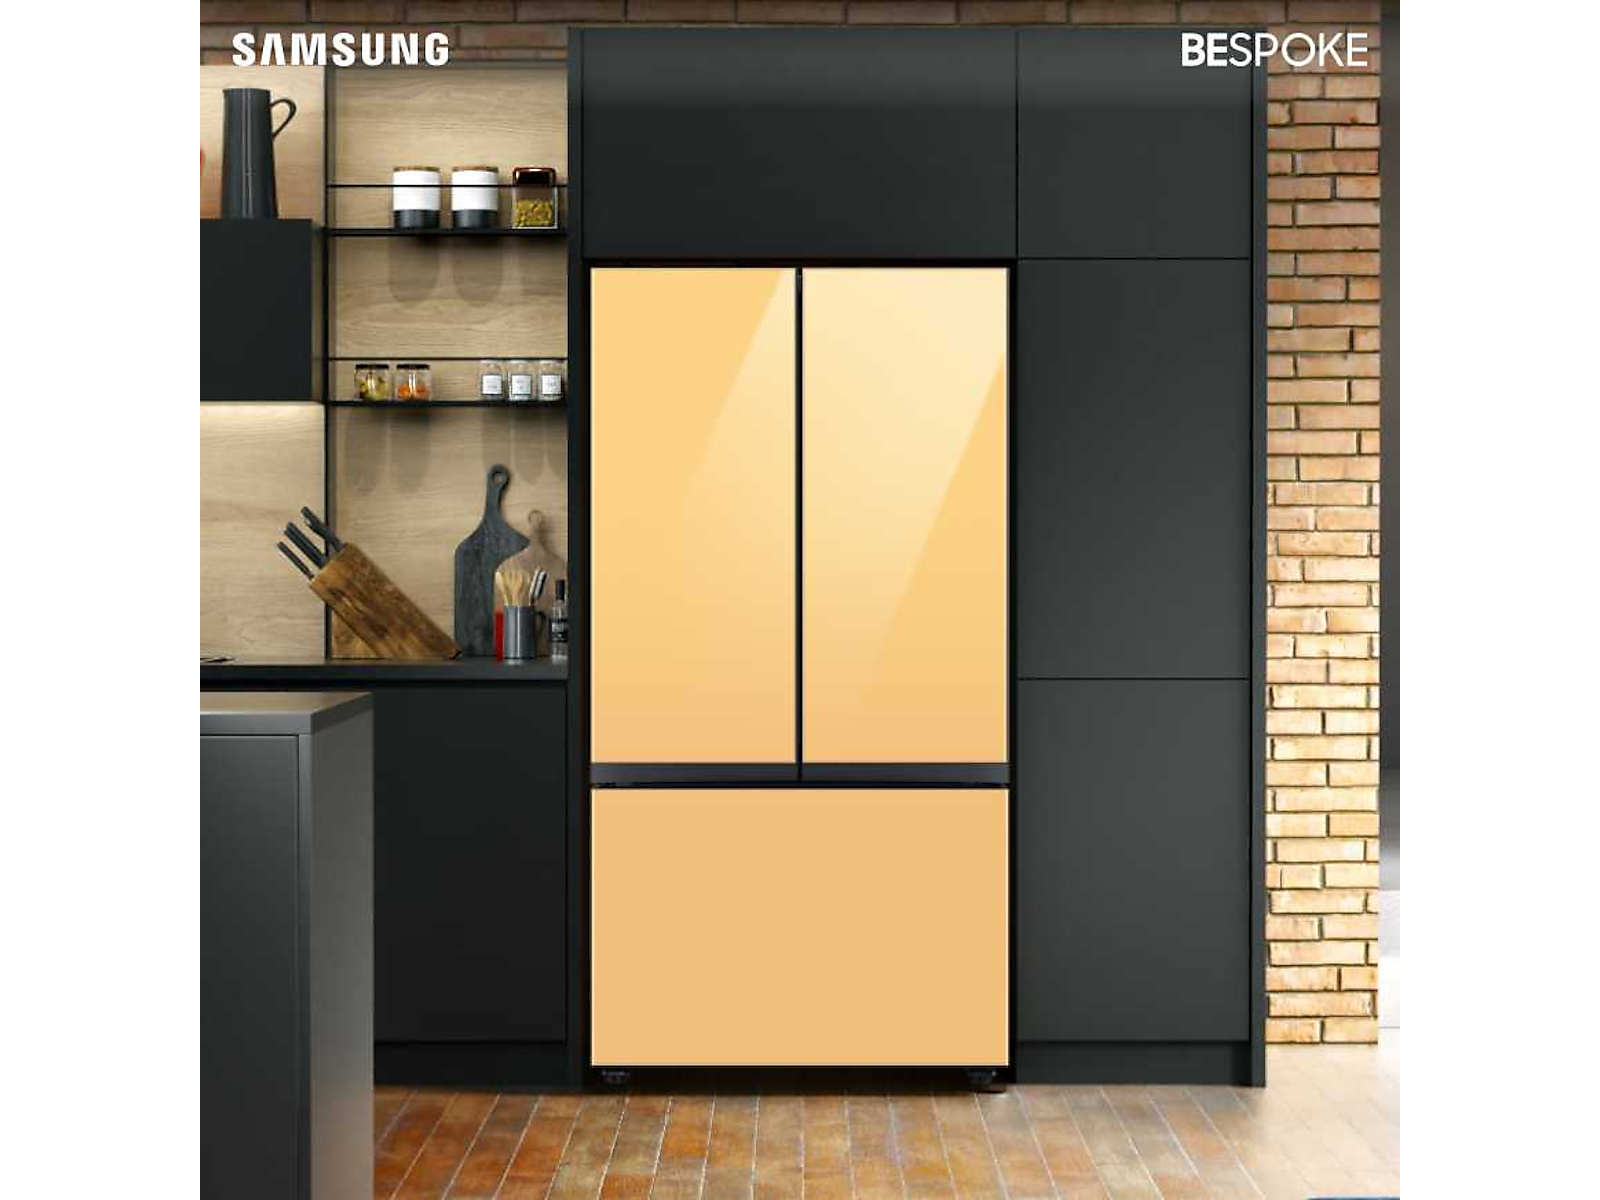 Samsung Bespoke 3-Door French Door Refrigerator in Stainless Steel (30 cu. ft.) with Beverage Center™ in Sunrise Yellow Glass(BNDL-1650313201162)